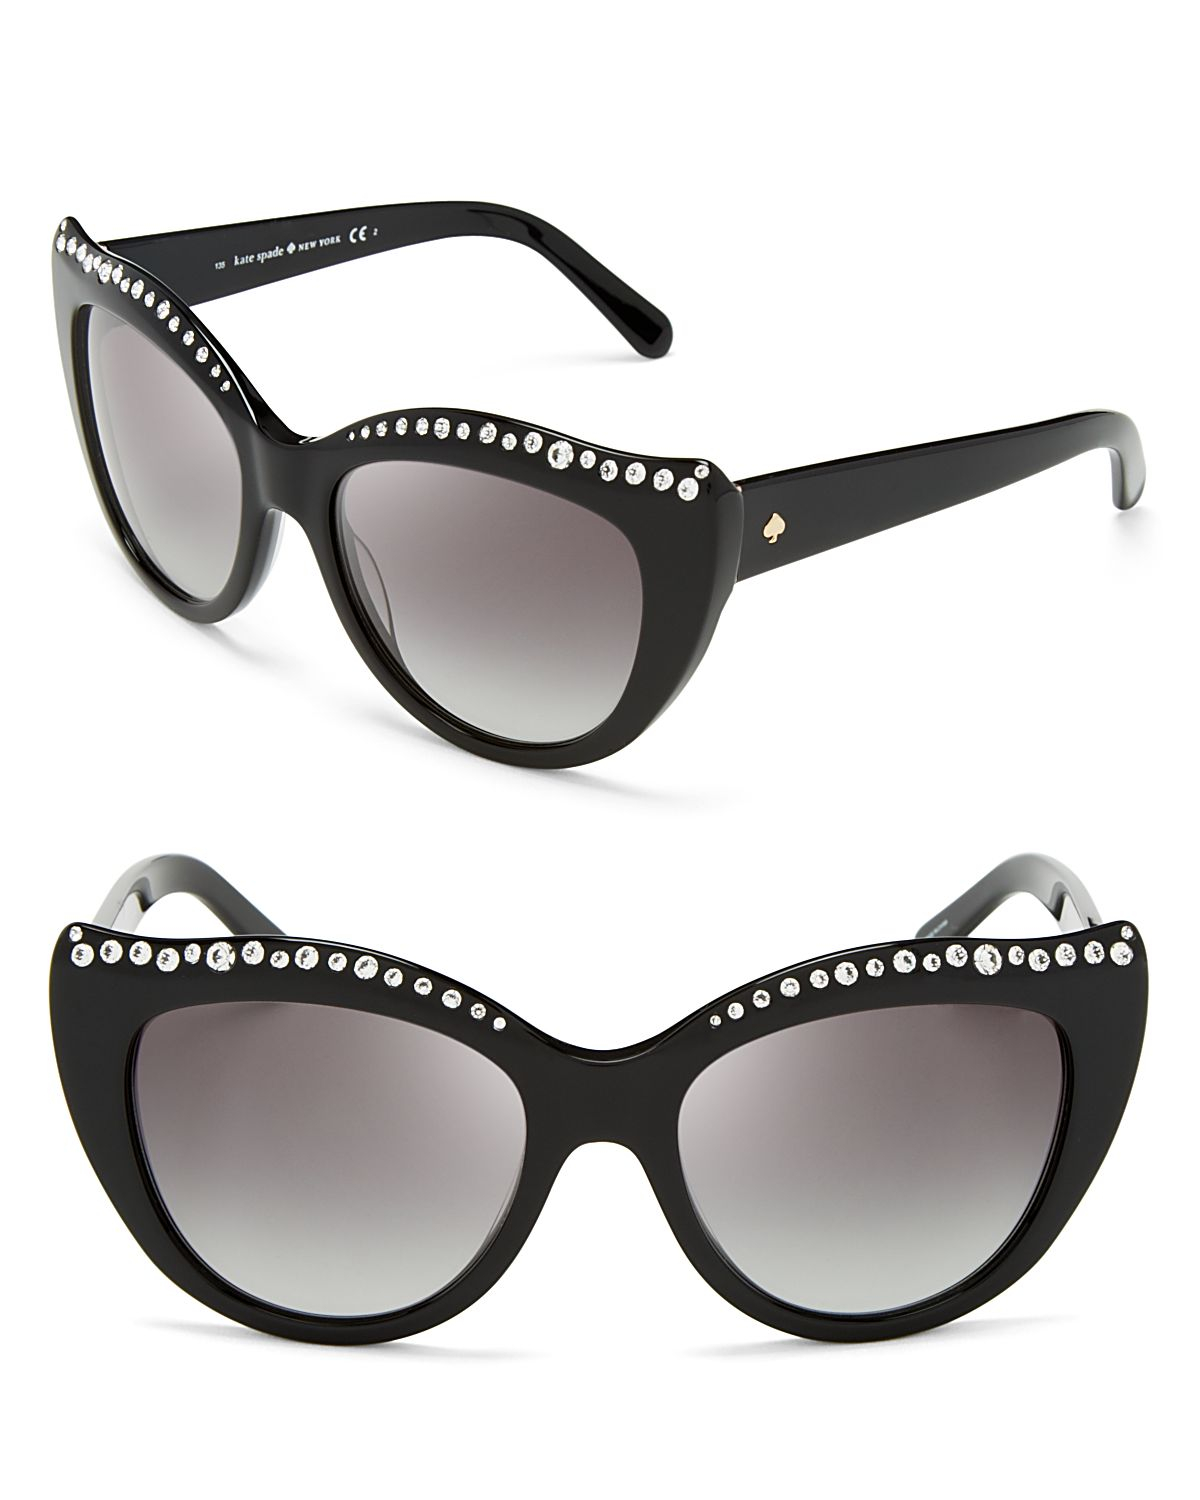 Lyst - Kate Spade New York Lesia Cat Eye Sunglasses in Black